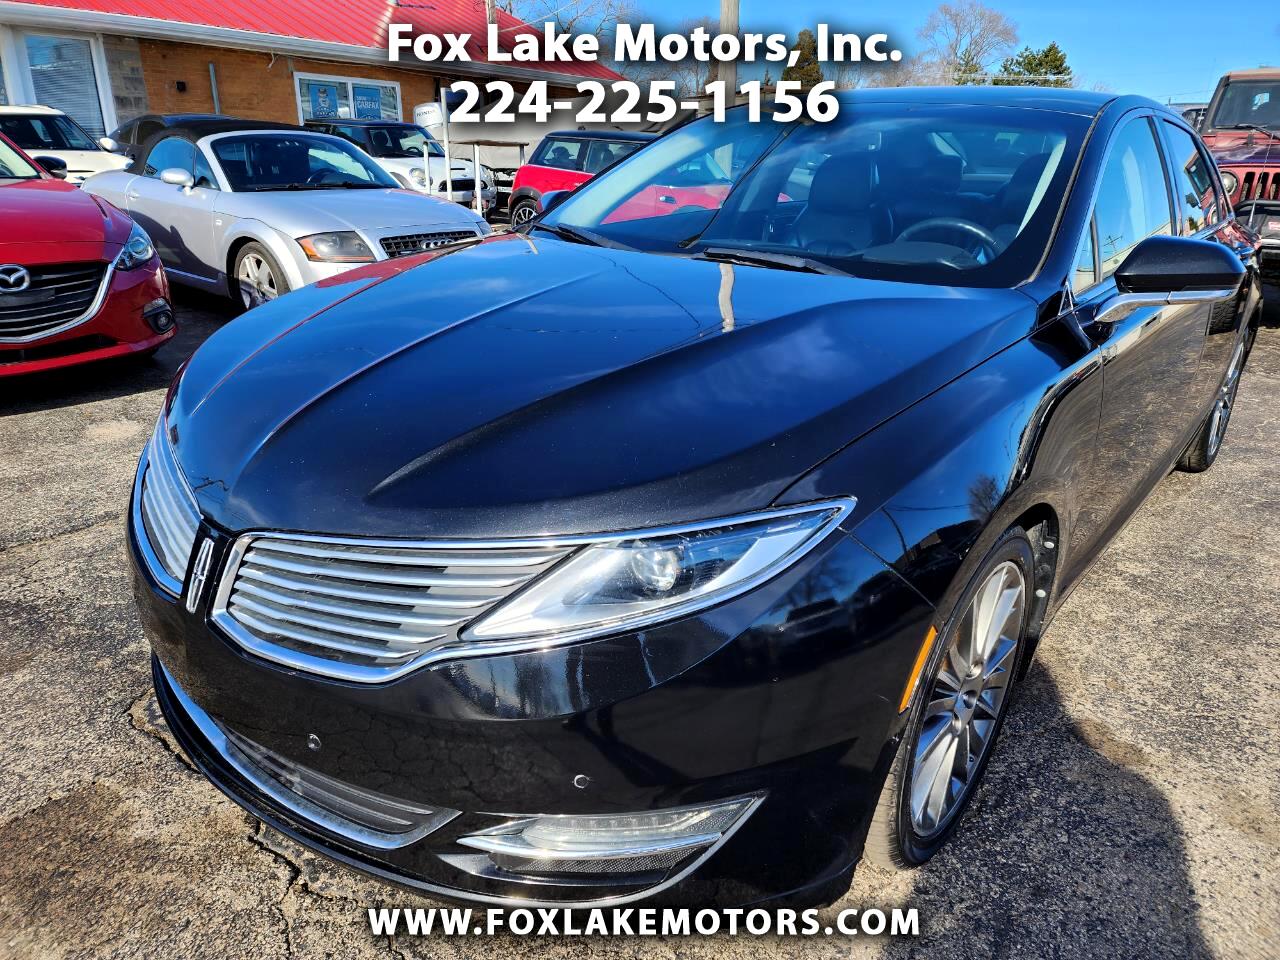 Used 2014 Lincoln MKZ Hybrid Sedan for Sale in Fox Lake IL 60020 Fox Lake  Motors, Inc.